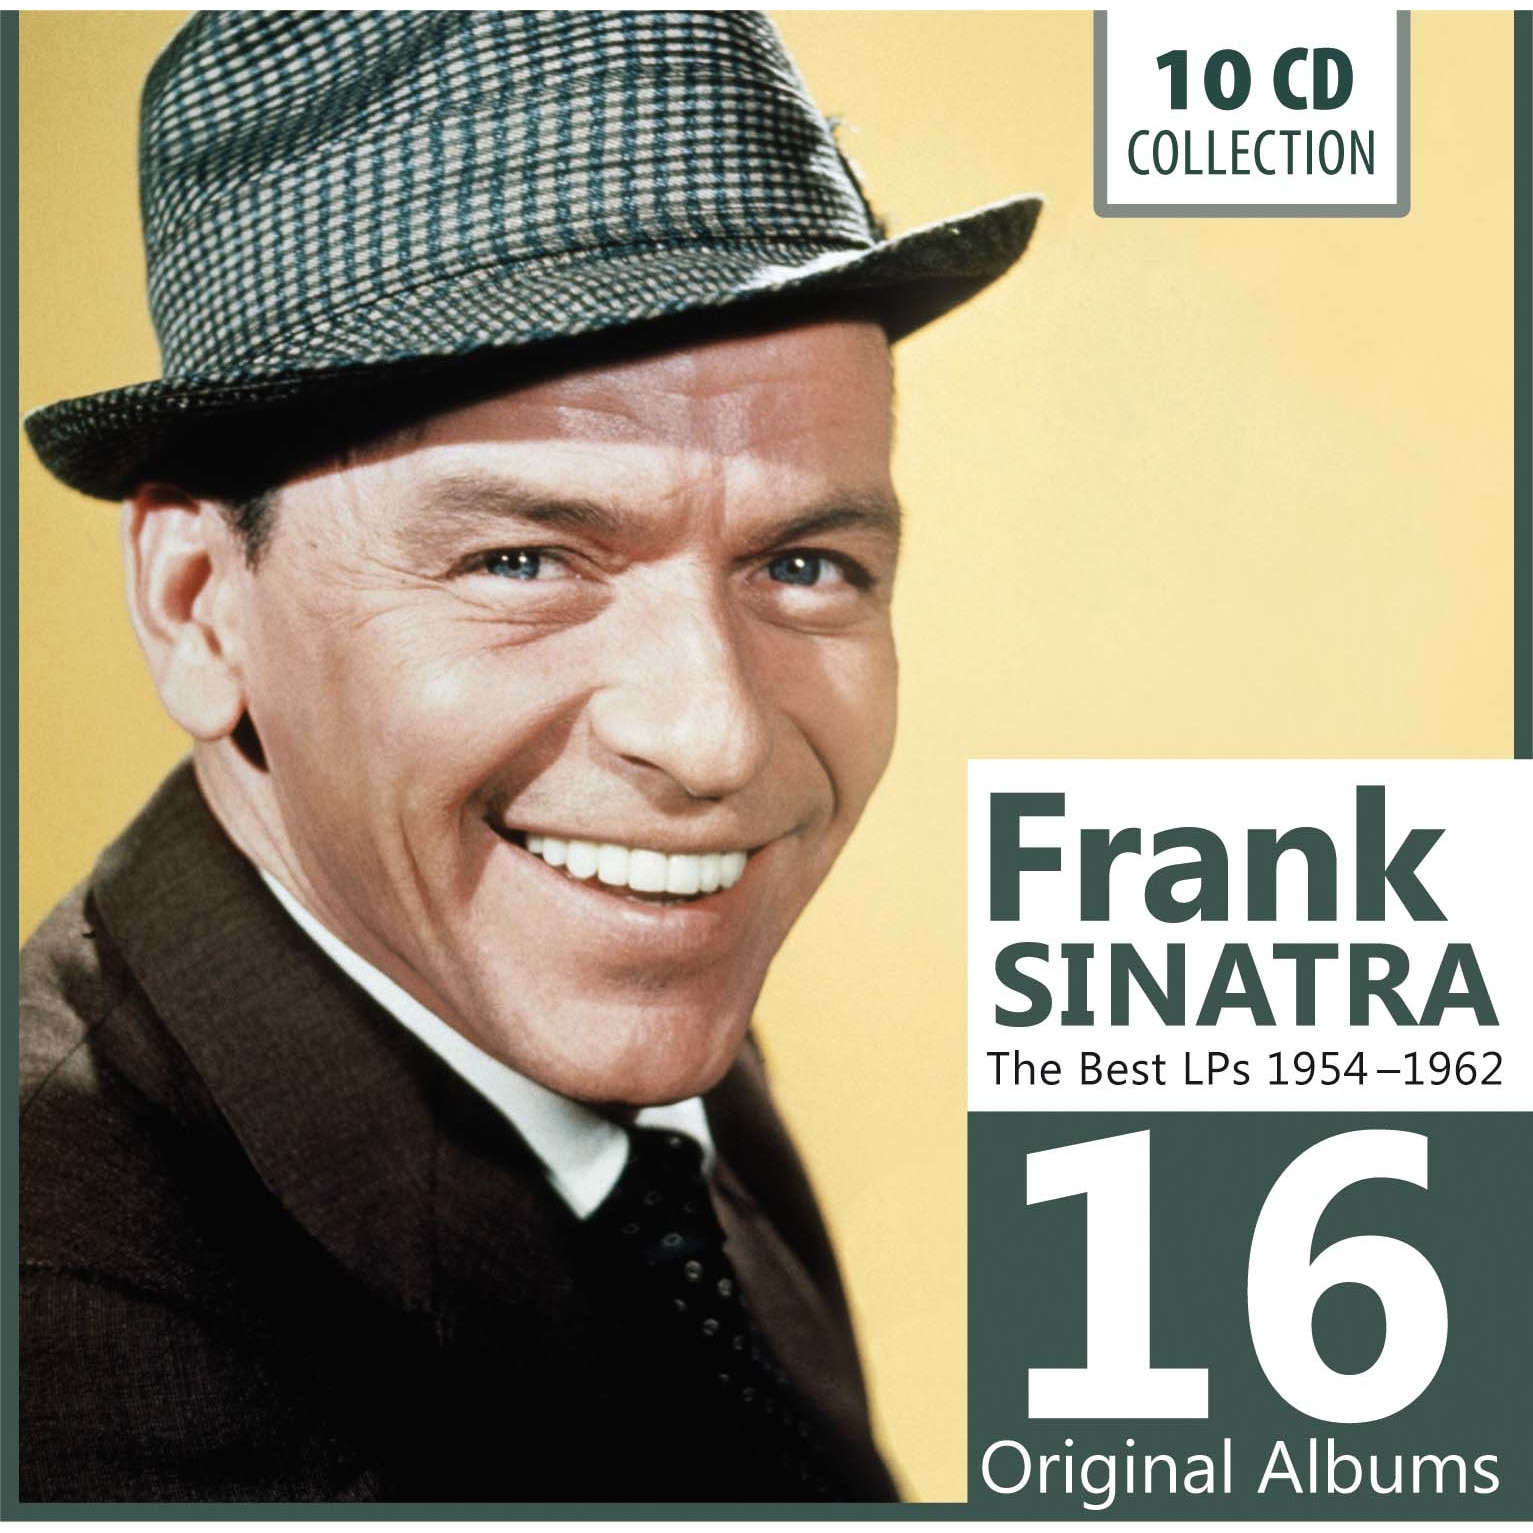 Frank Sinatra - Best Lp's 1954-62 / 16 Original Albums 10CD - eMAG.ro